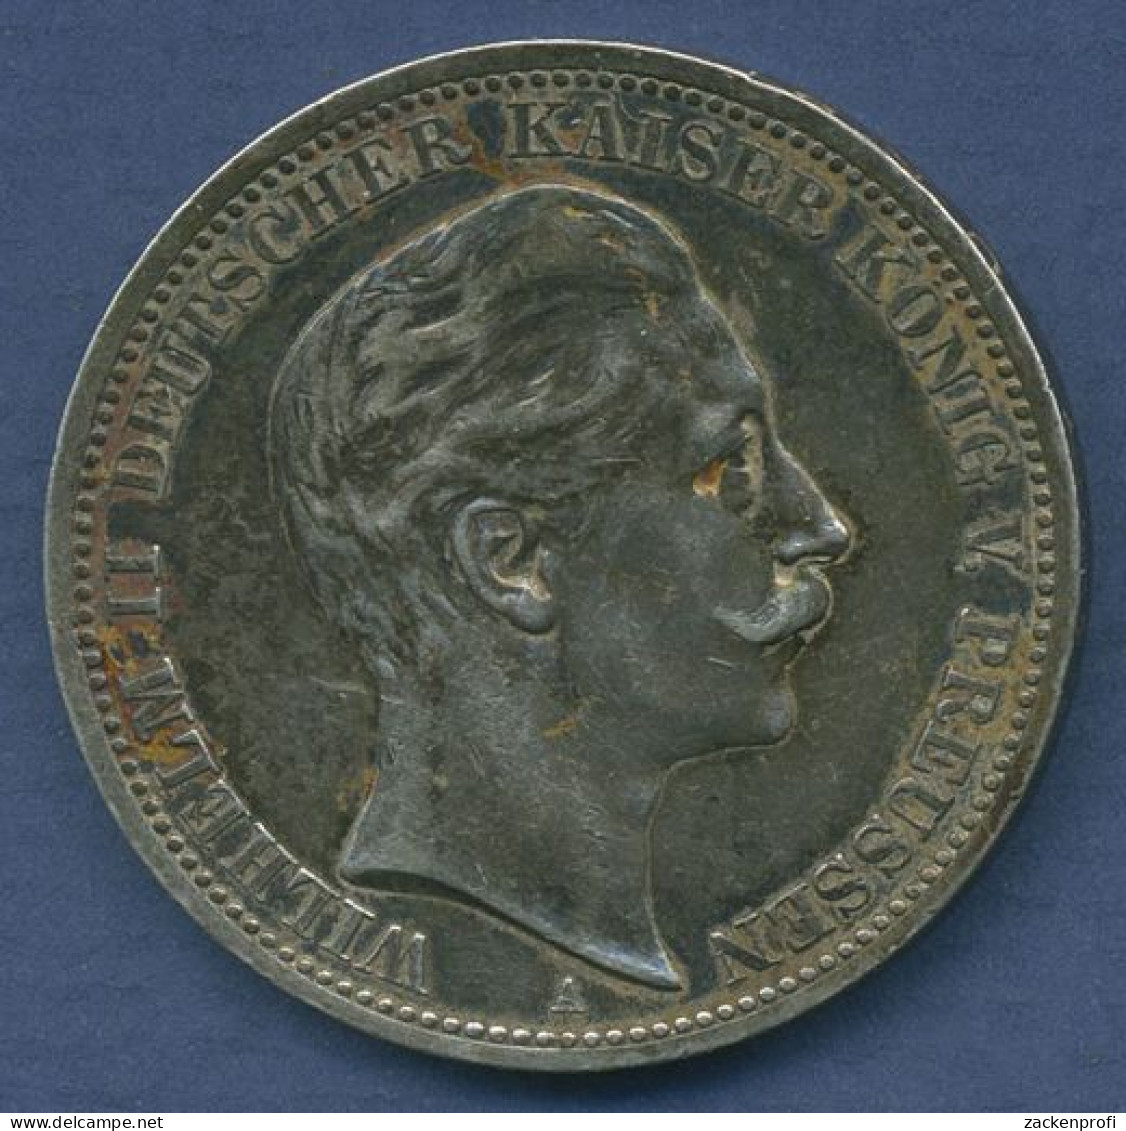 Preußen 3 Mark 1909 A, Kaiser Wilhelm II., J 103 Vz, Bunte Patina (m3763) - 2, 3 & 5 Mark Plata